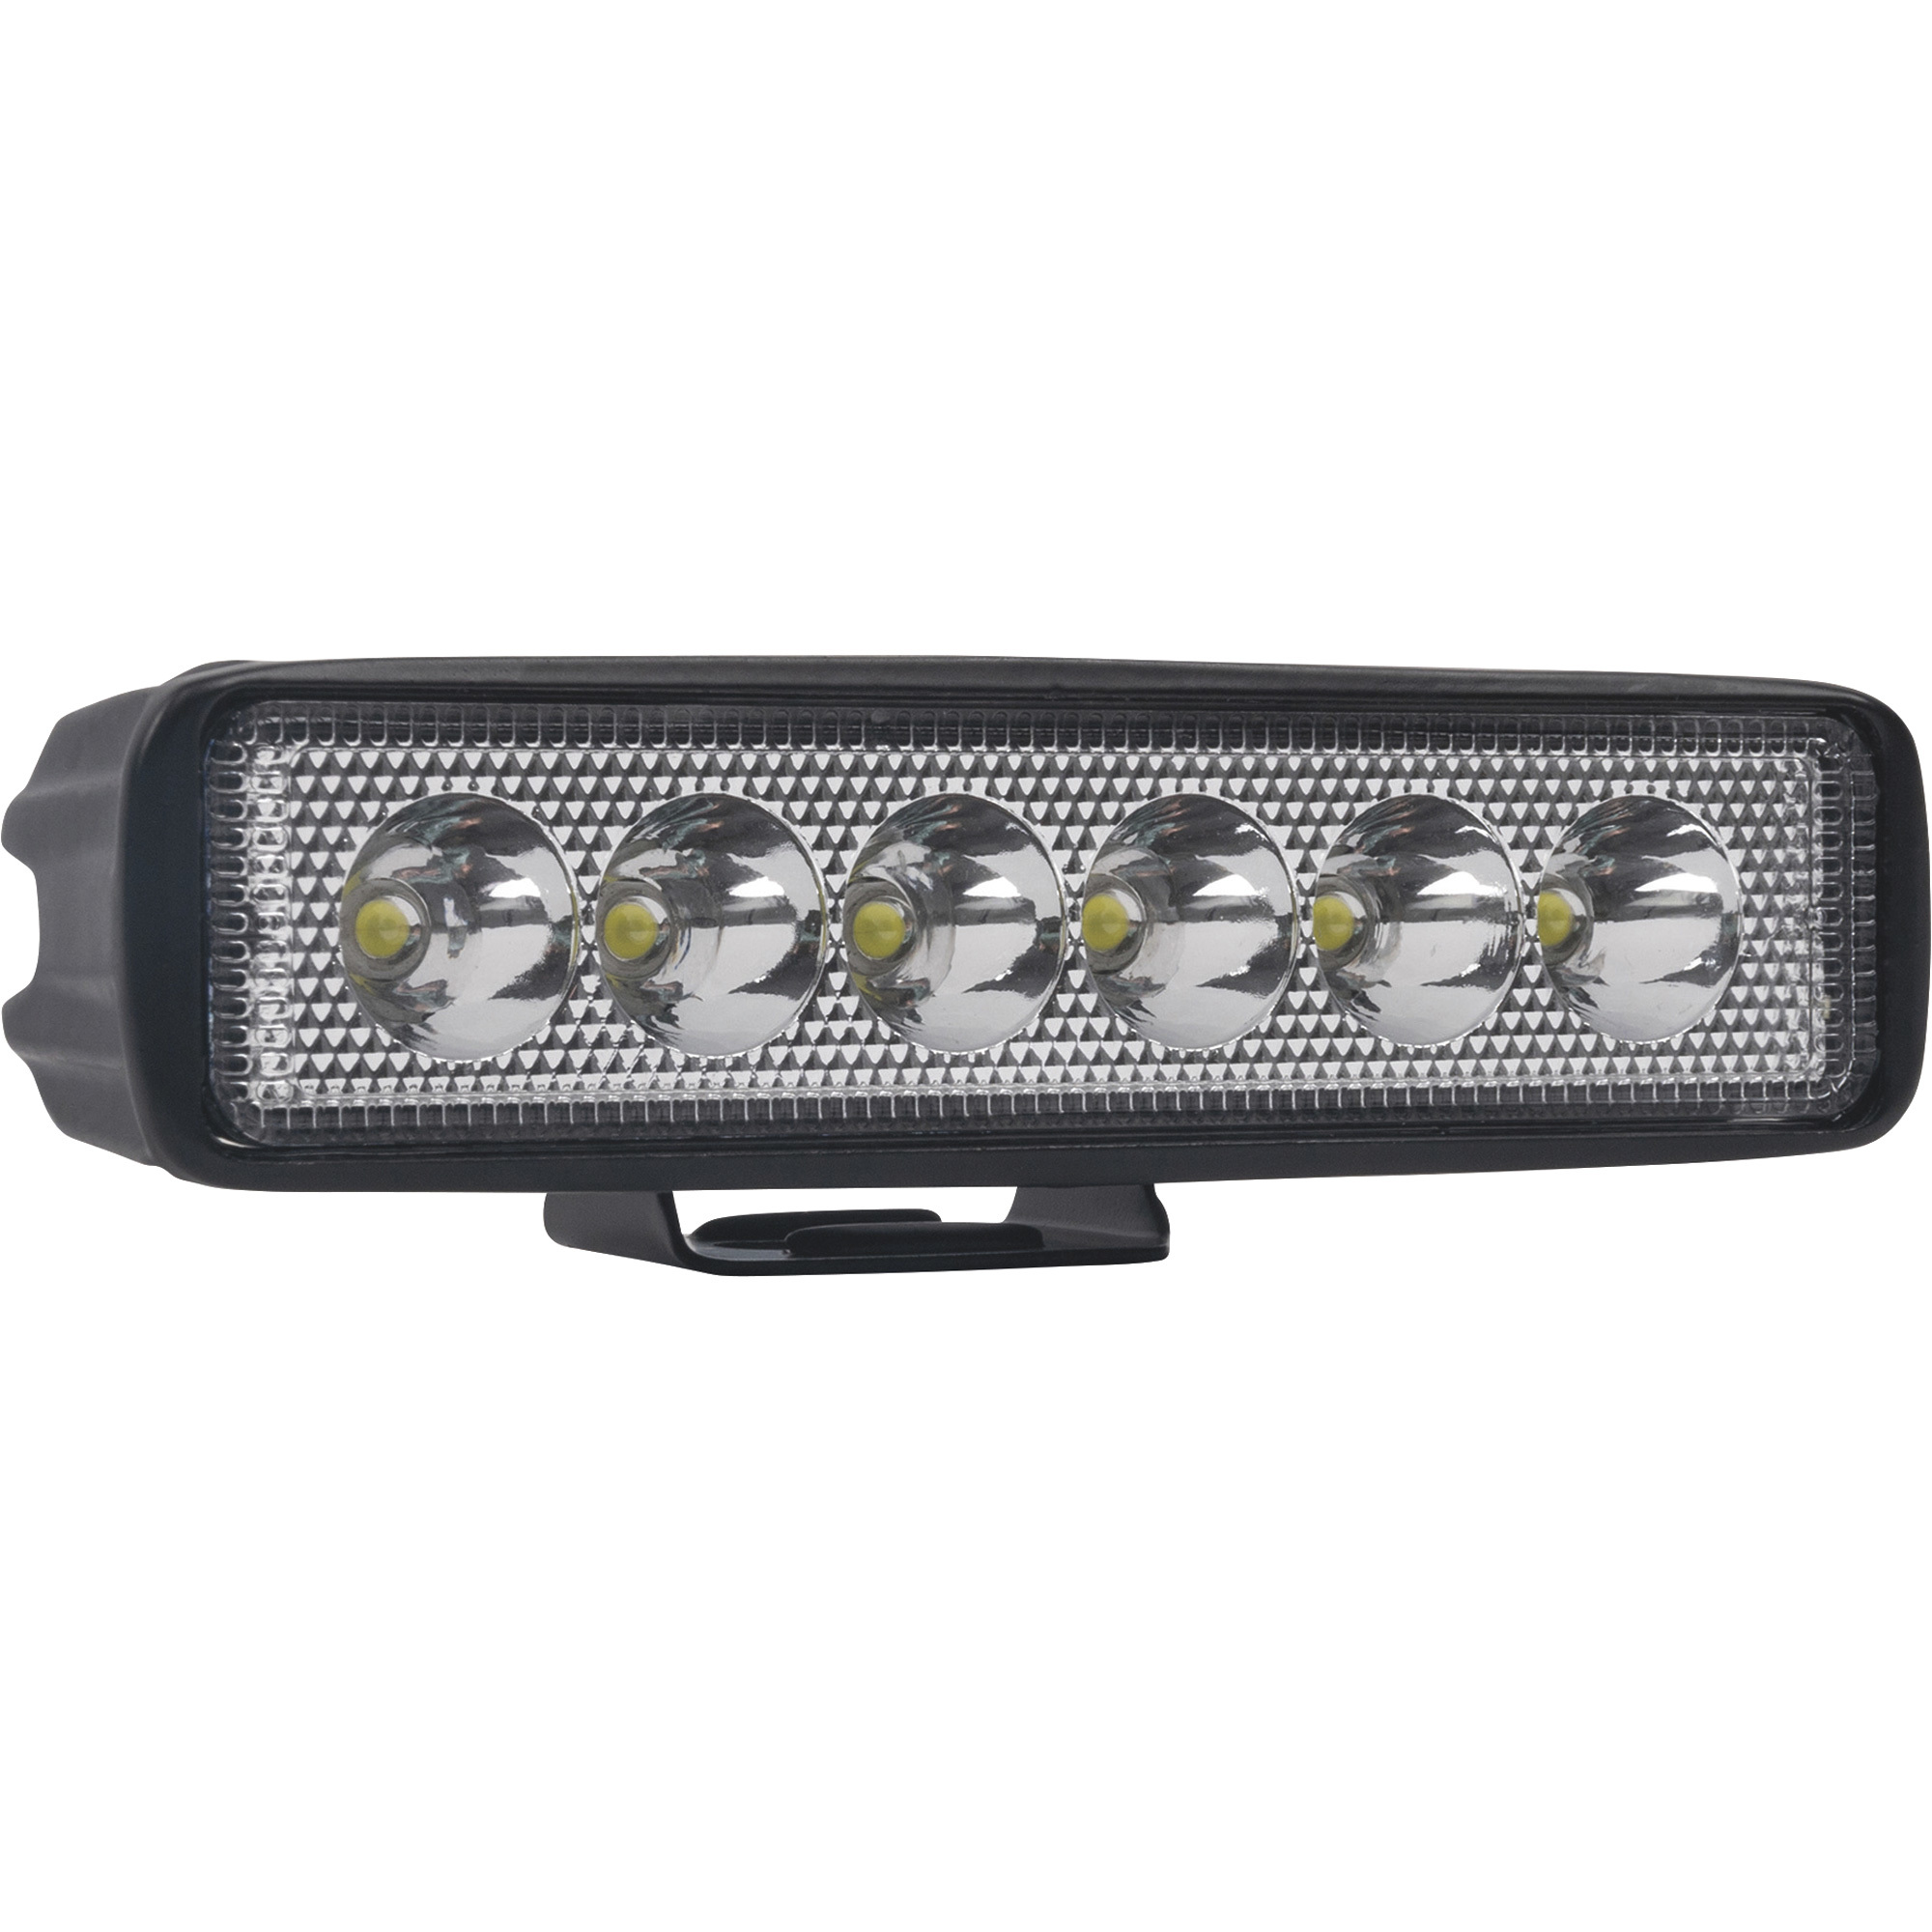 Blazer 12/24 Volt LED Spot Light Bar â 6Inch, 900 Lumens, 6 LEDs, Model CWL1116